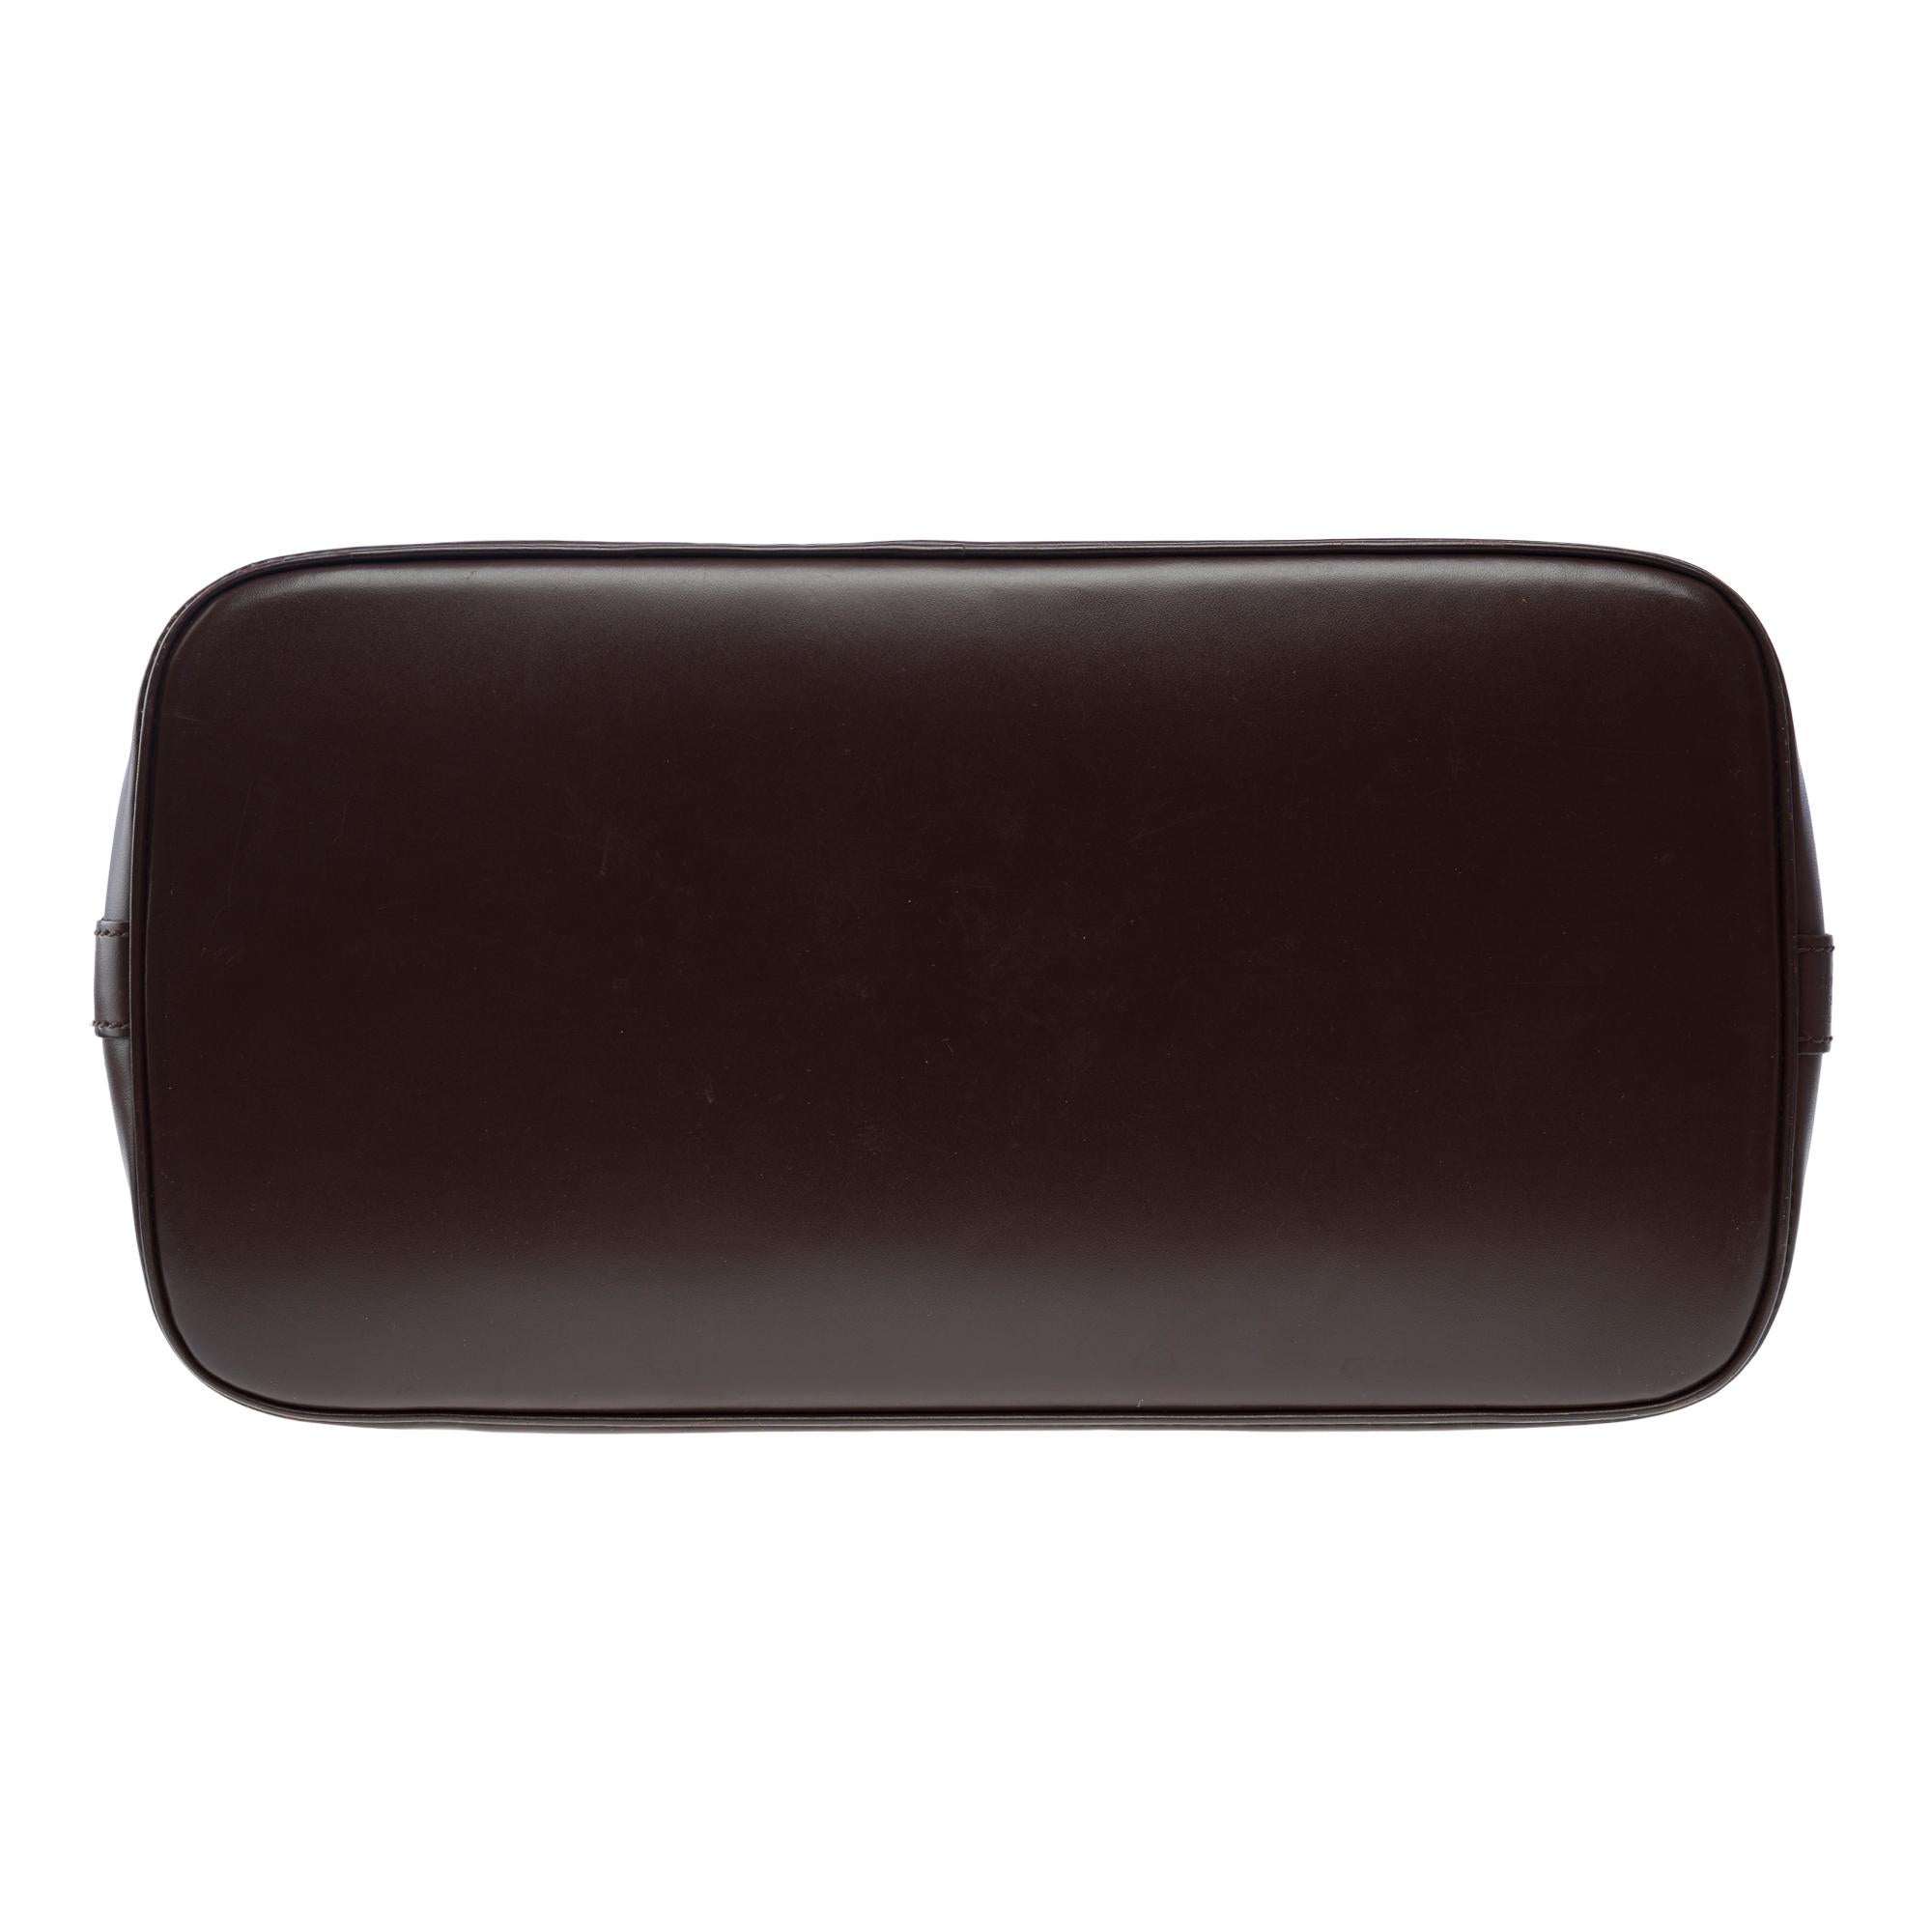 Lovely Louis Vuitton Alma handbag strap in brown damier canvas, GHW For Sale 6